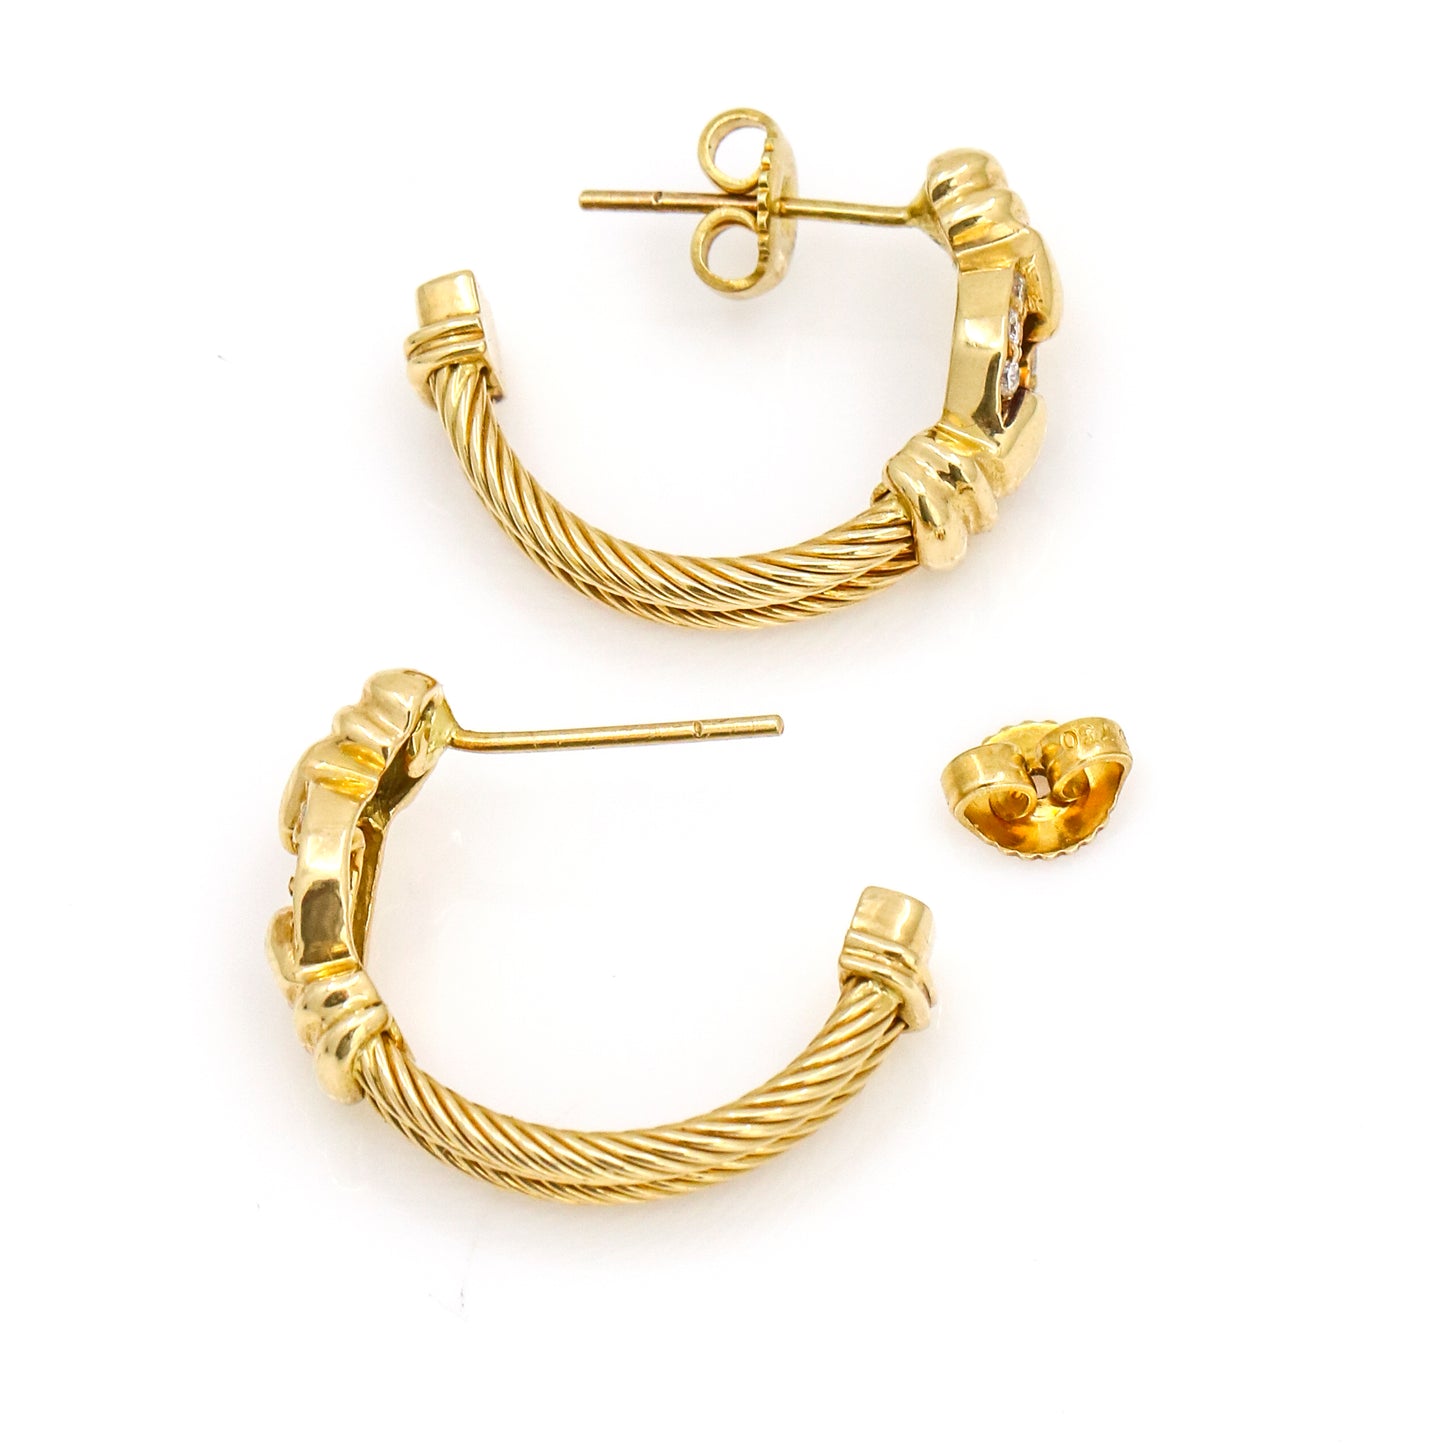 Philippe Charriol Women's Diamond Cable Half Hoop Earrings in 18k Yellow Gold